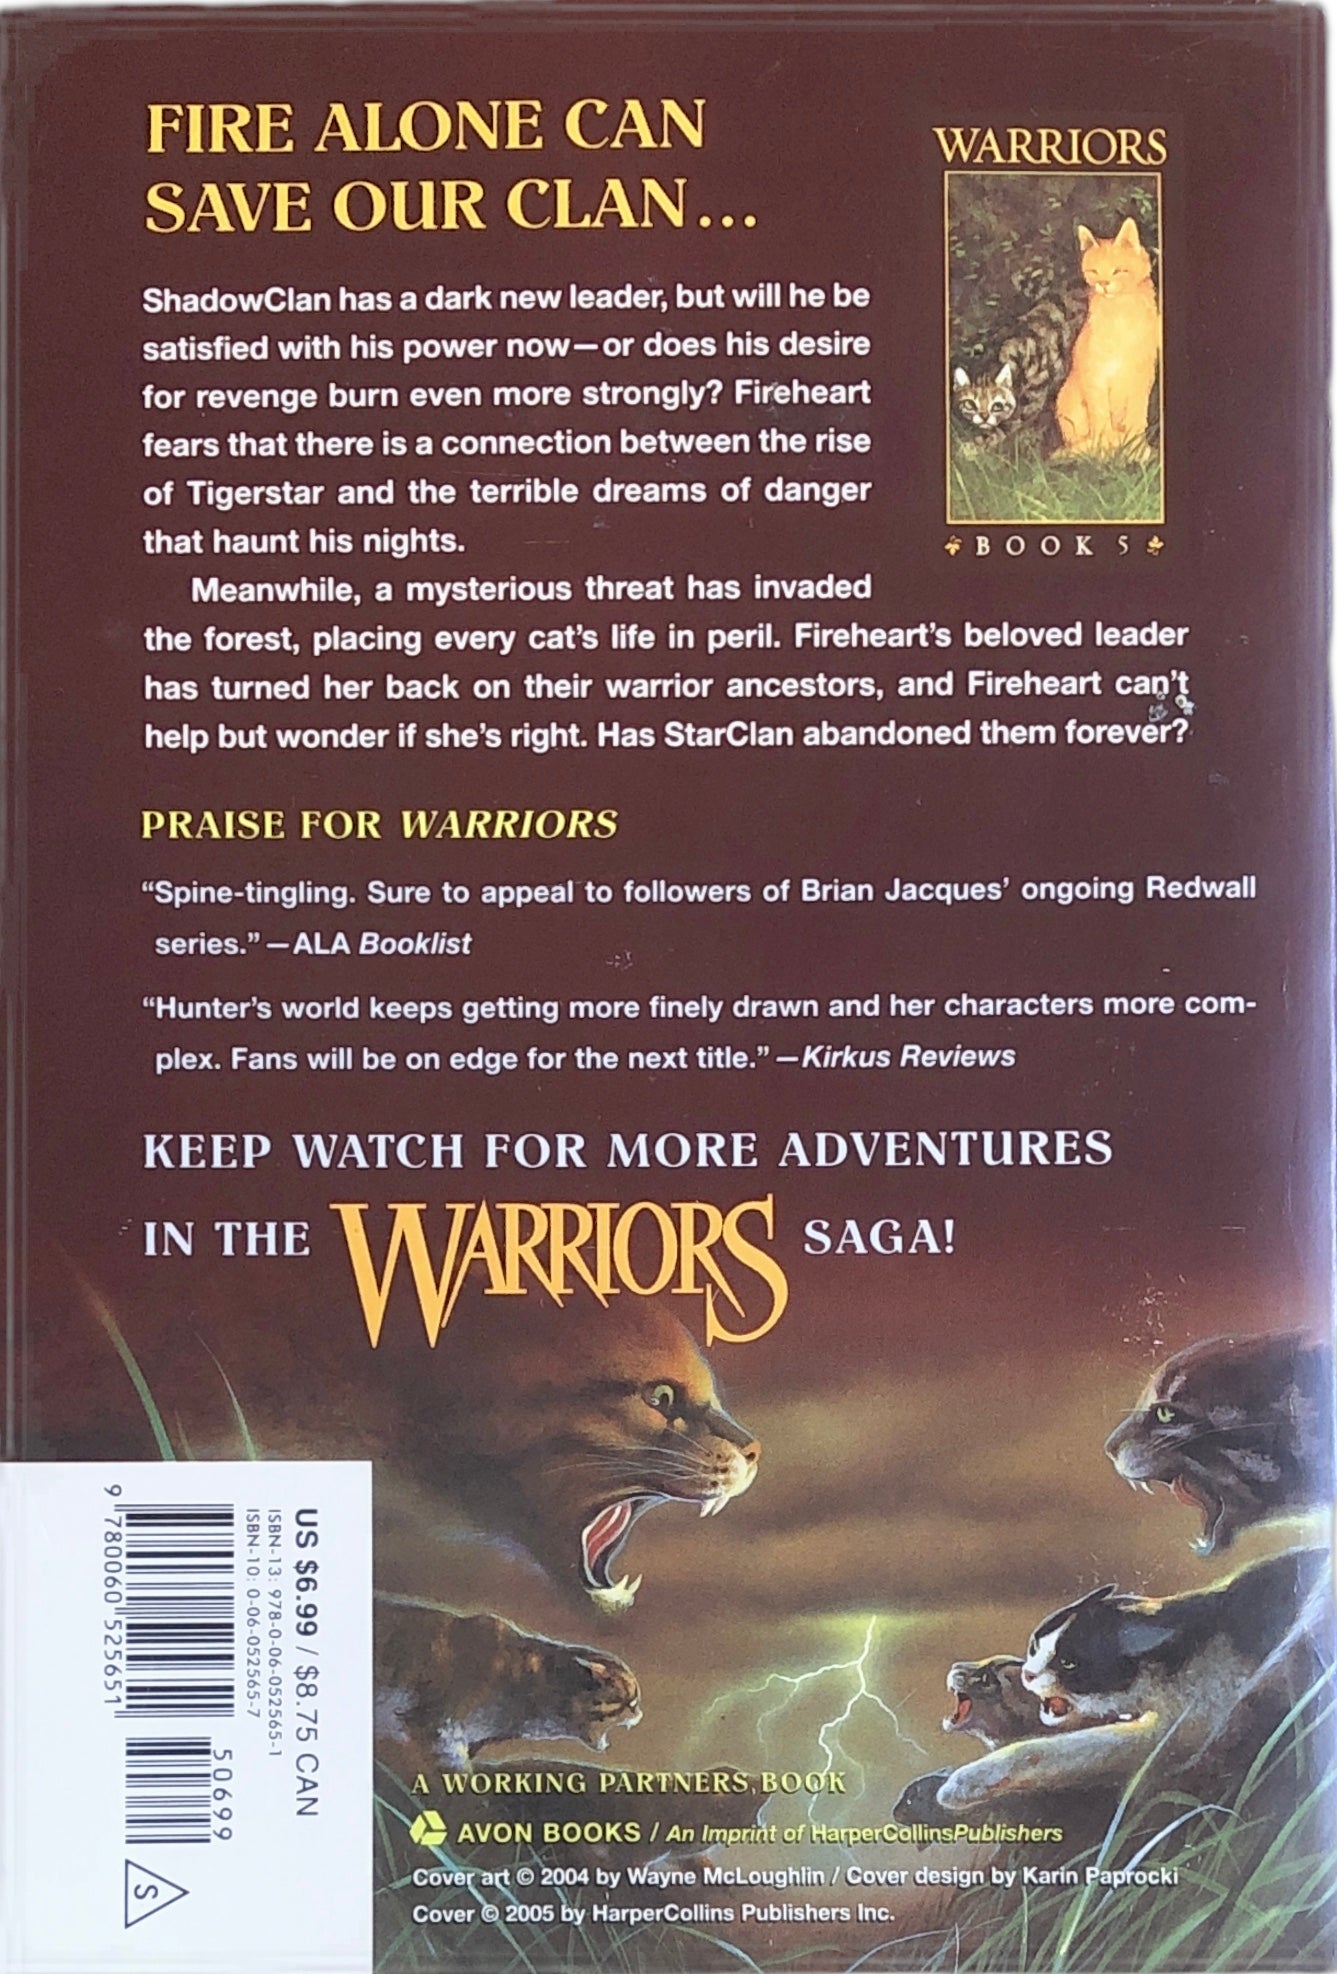 Warriors: A Dangerous Path (The Prophecies Begin Book #5) by Erin Hunter